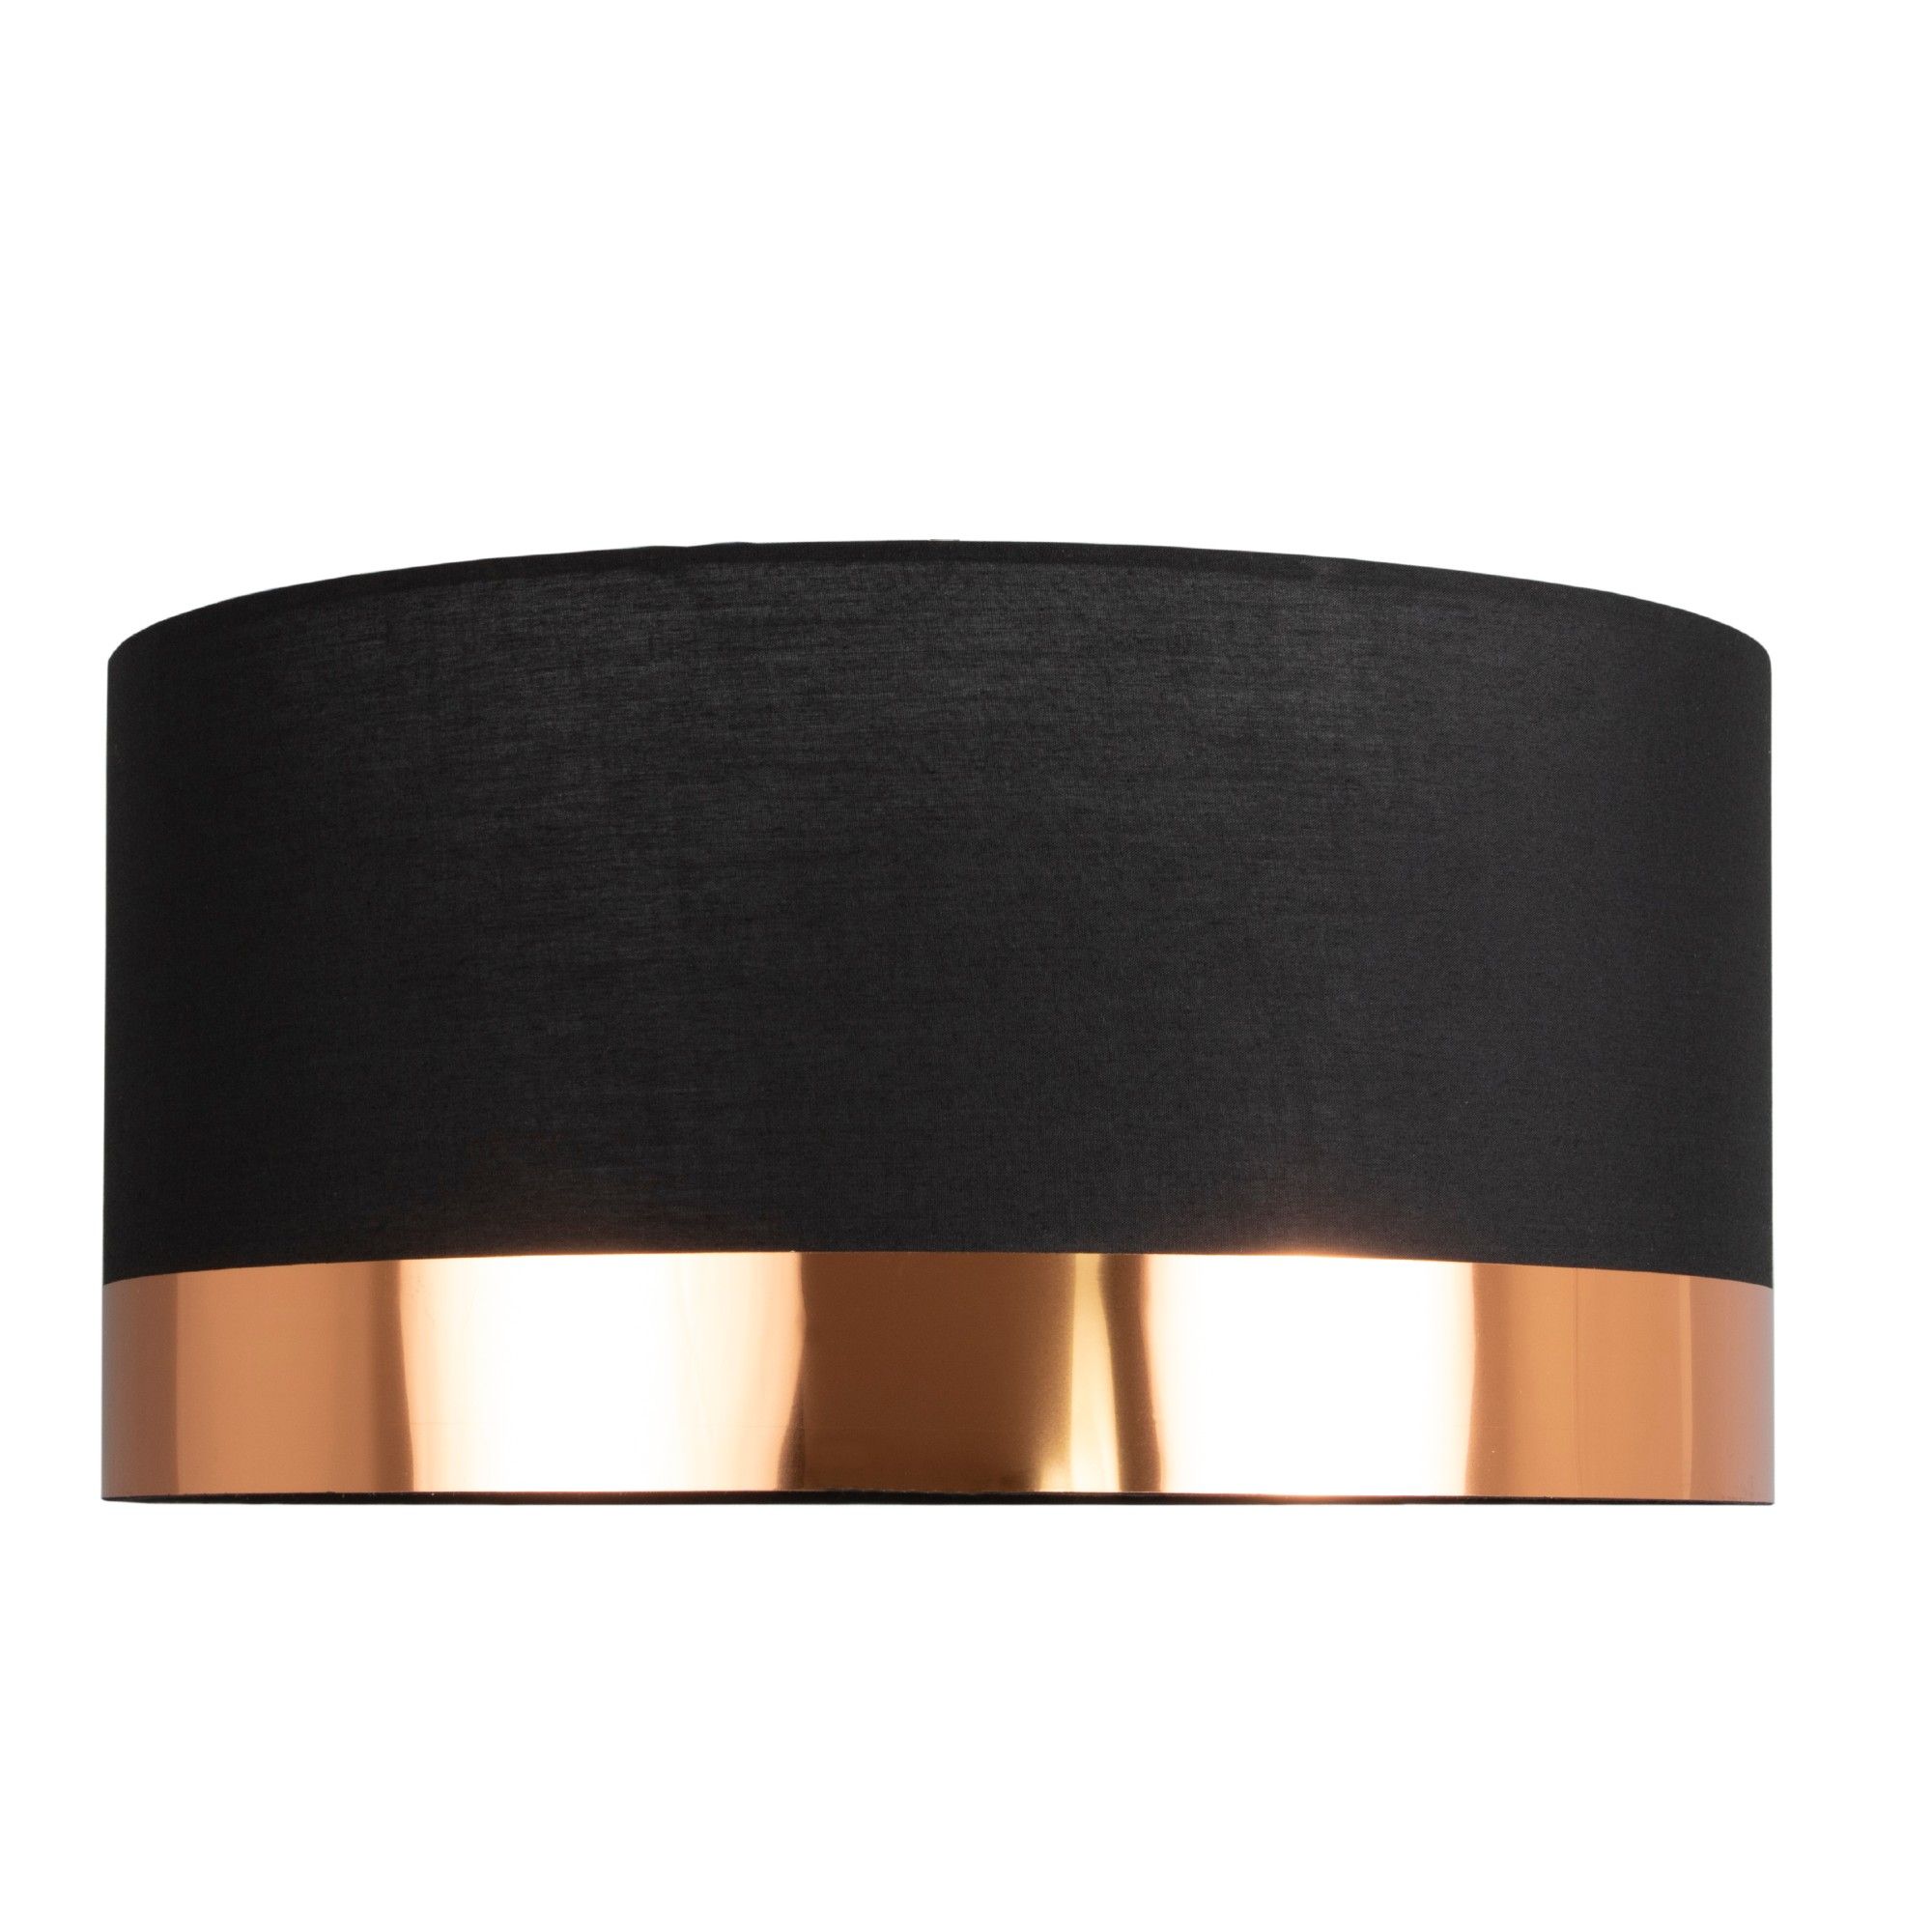 Nela Black and Copper 40cm Pendant Ceiling Light Shade